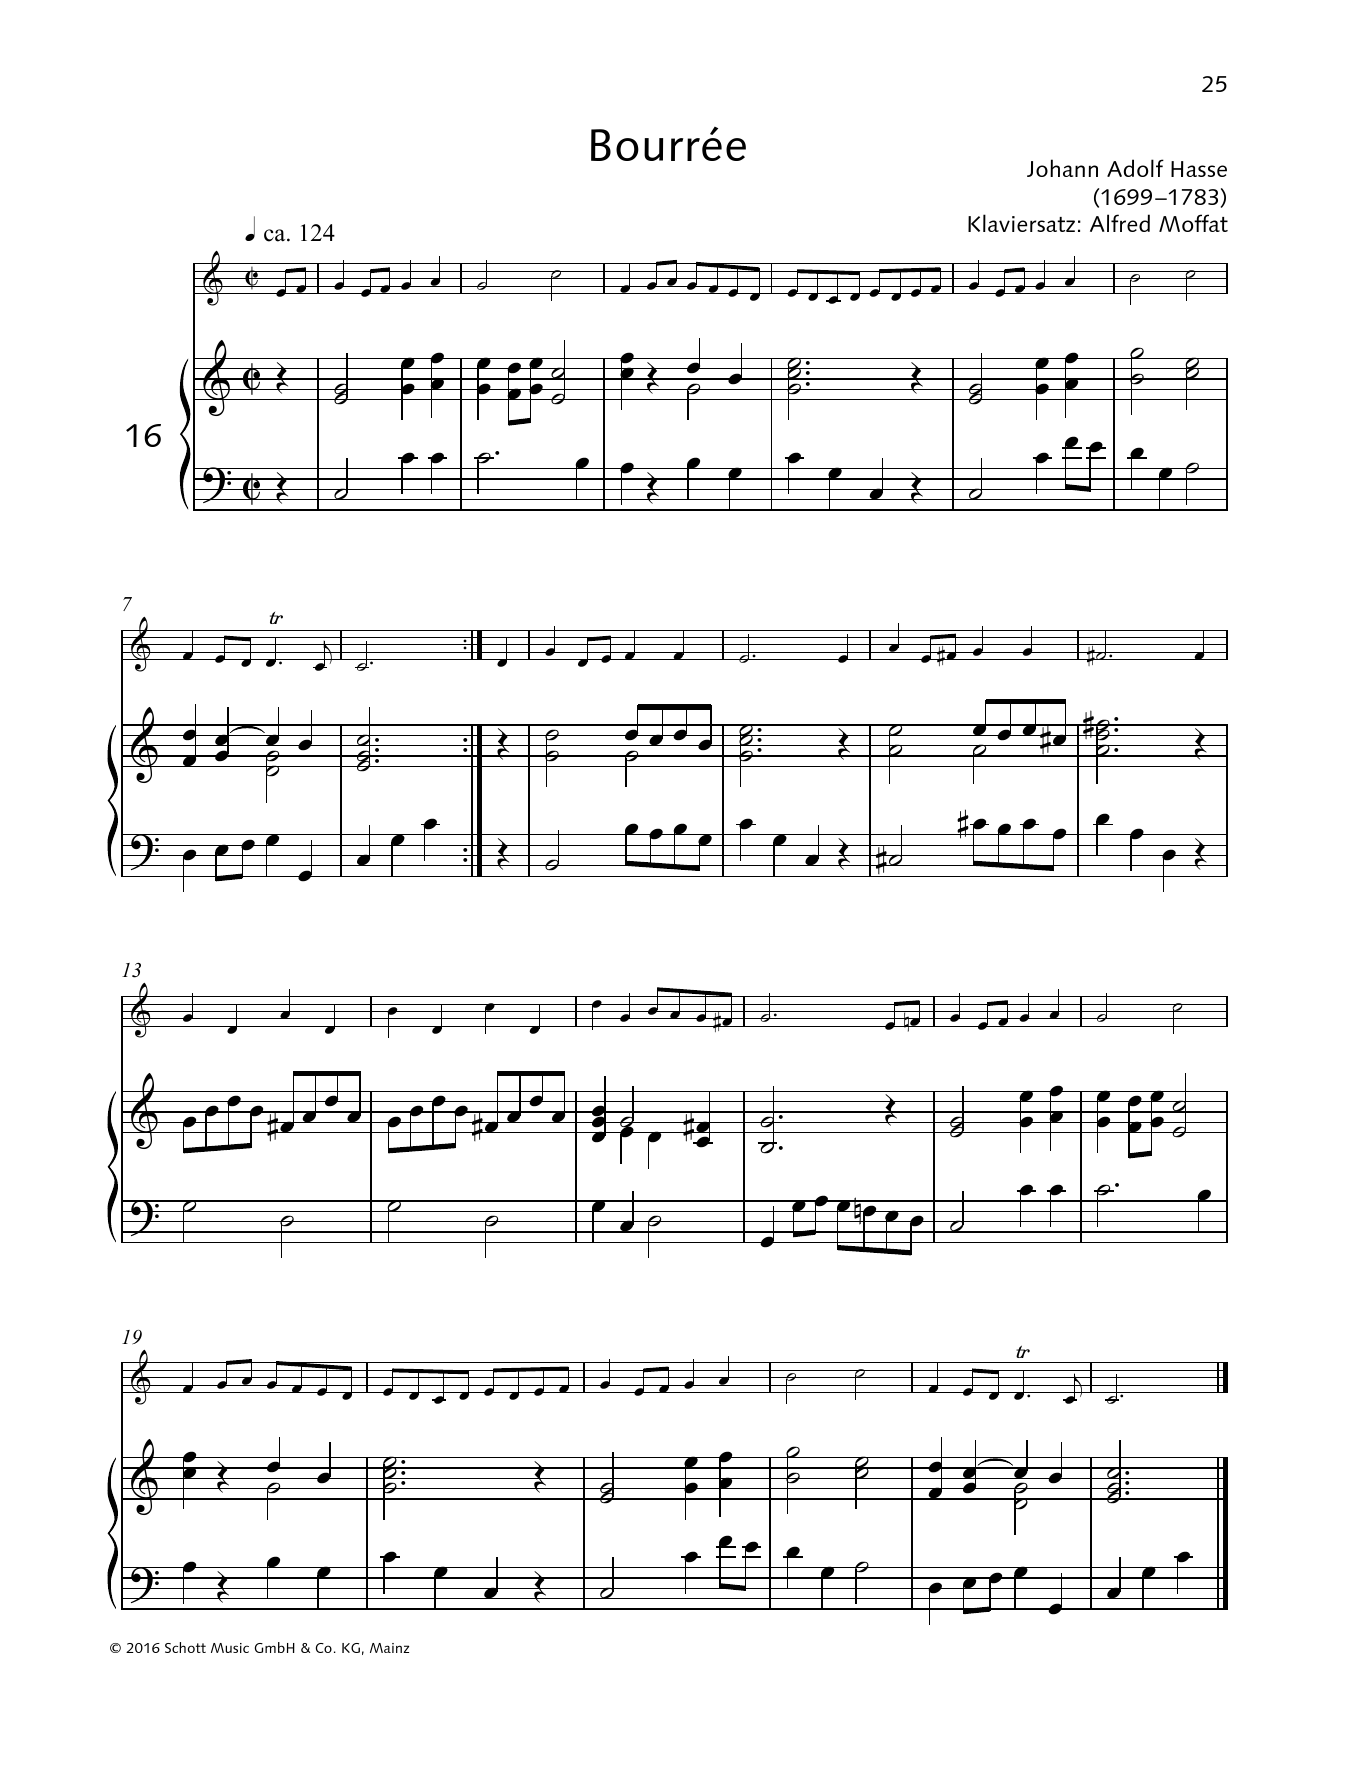 Download Elisabeth Kretschmann Bourree Sheet Music and learn how to play Woodwind Solo PDF digital score in minutes